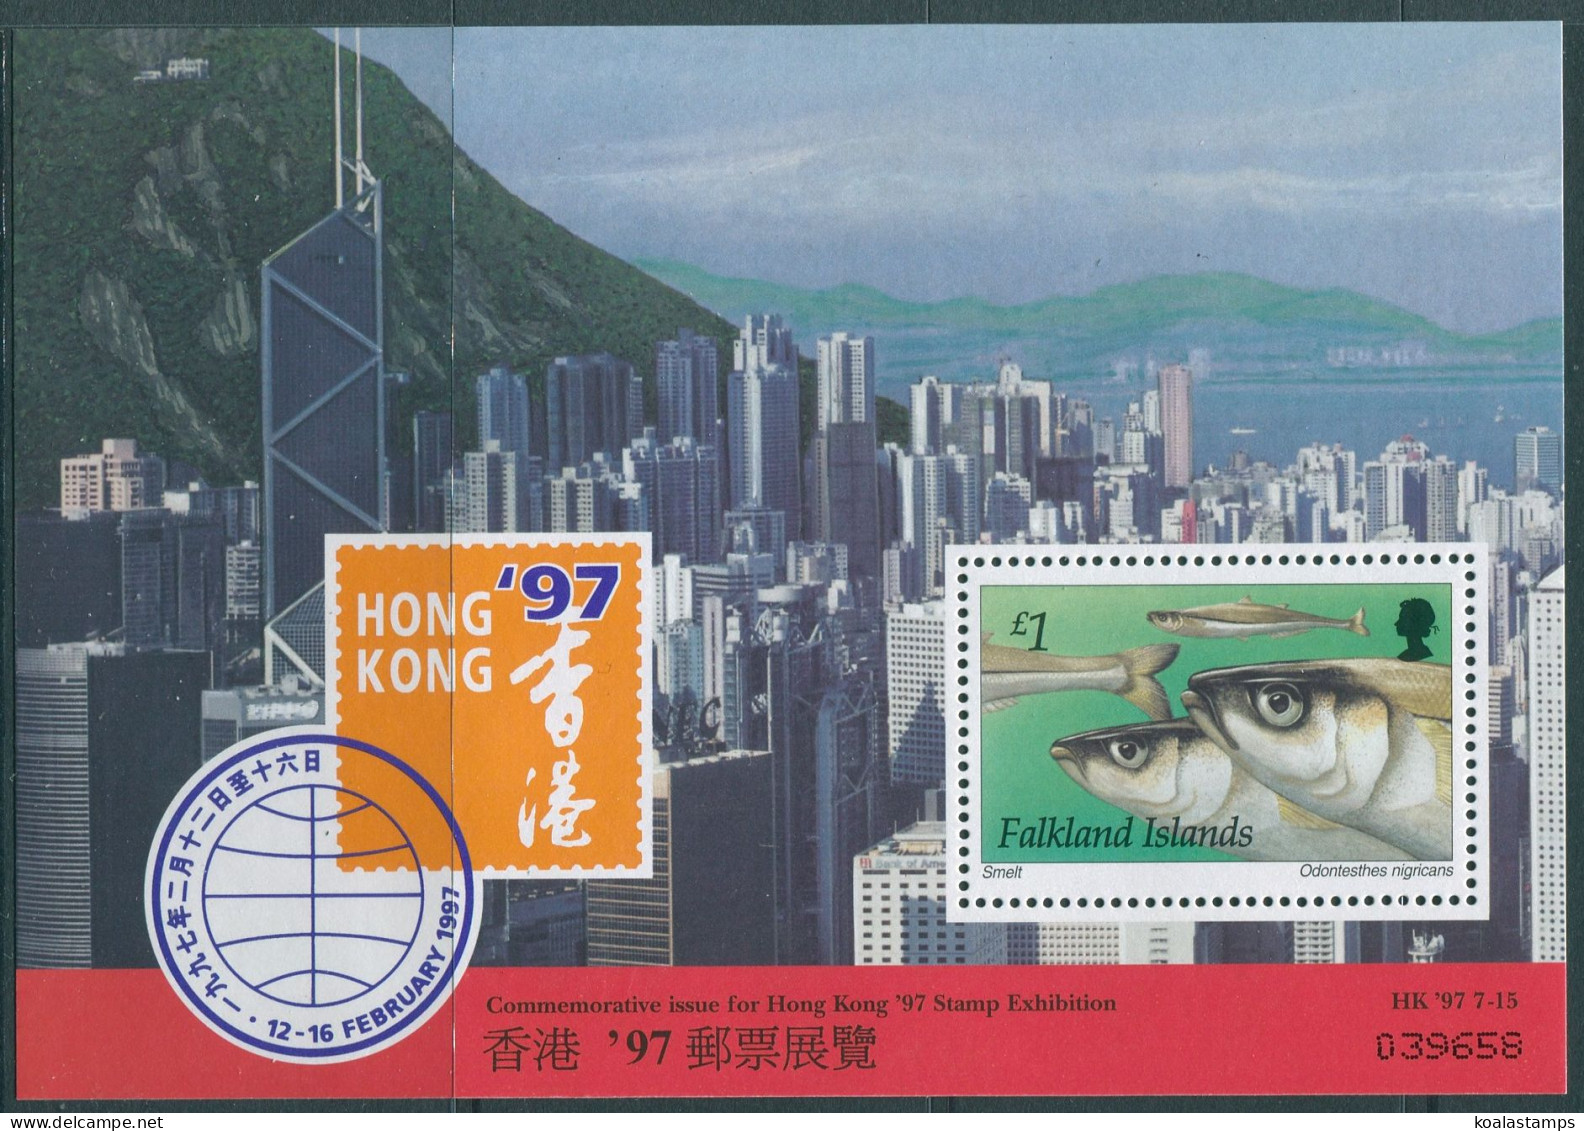 Falkland Islands 1997 SG779 Hong Kong Stamp Exhibition Smelt MS MNH - Islas Malvinas